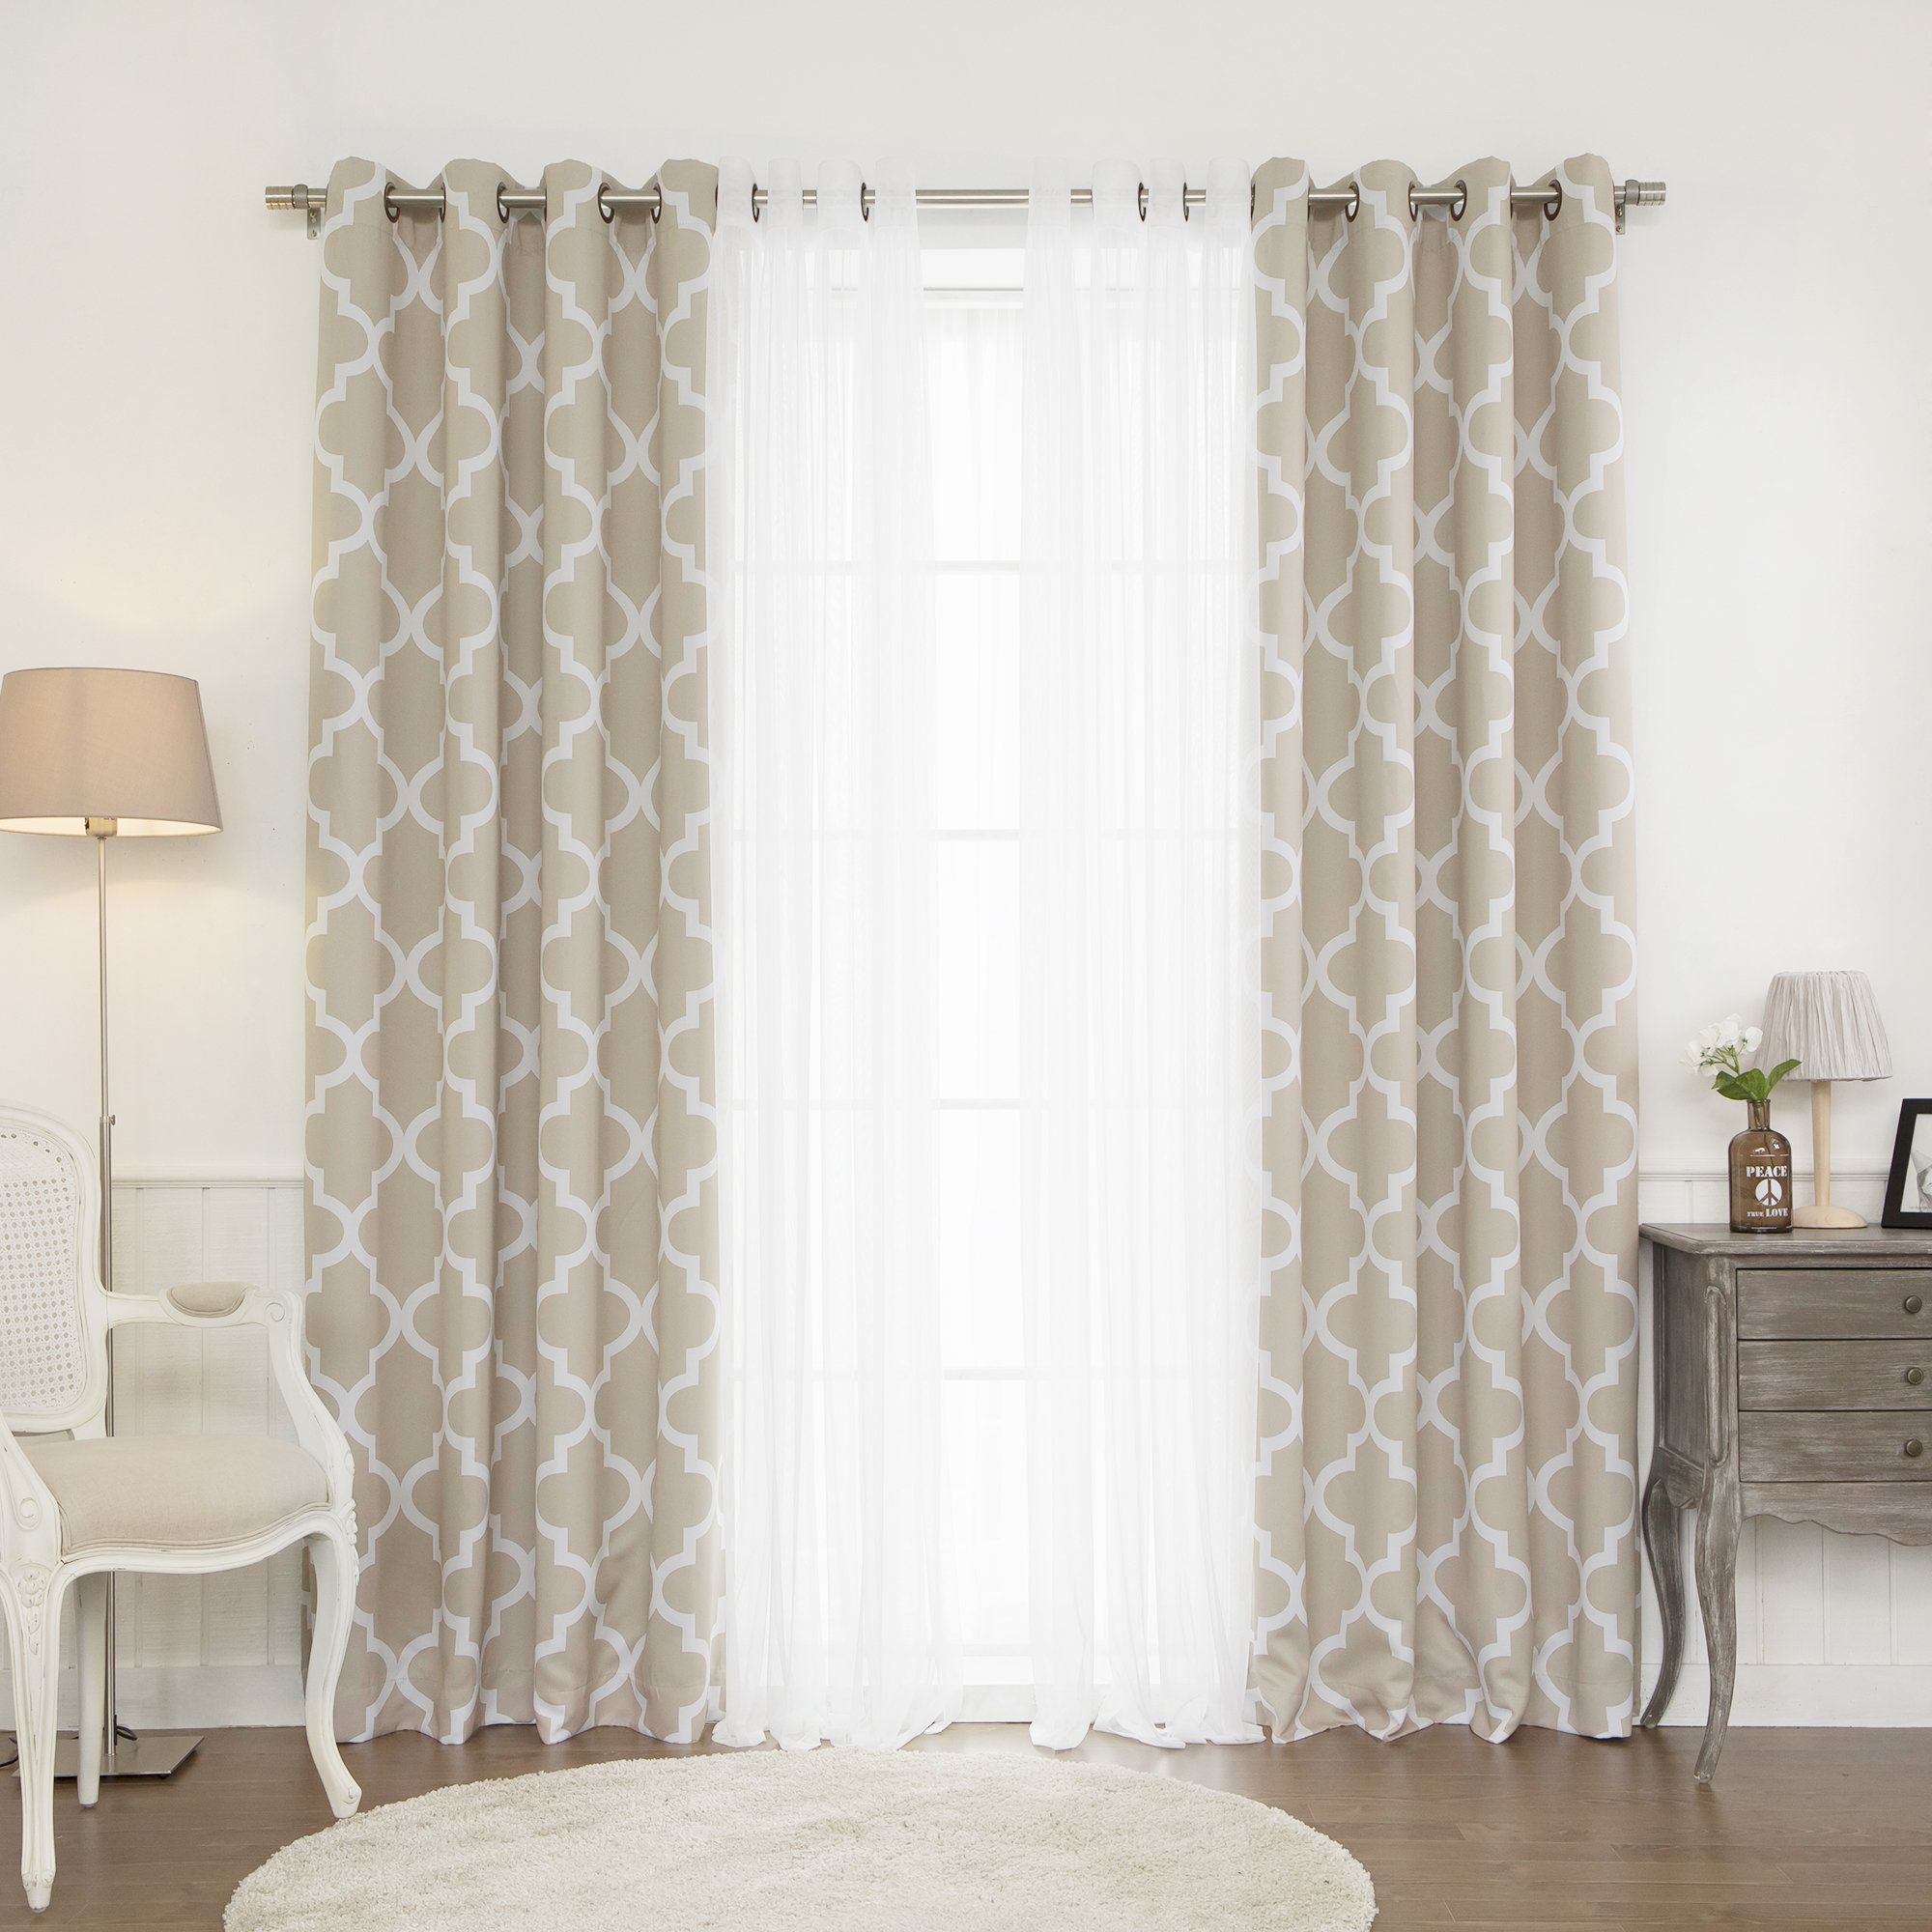 Lippincott Geometric Sheer Grommet Curtain Panels | Window Inside Essentials Almaden Fretwork Printed Grommet Top Curtain Panel Pairs (View 19 of 20)